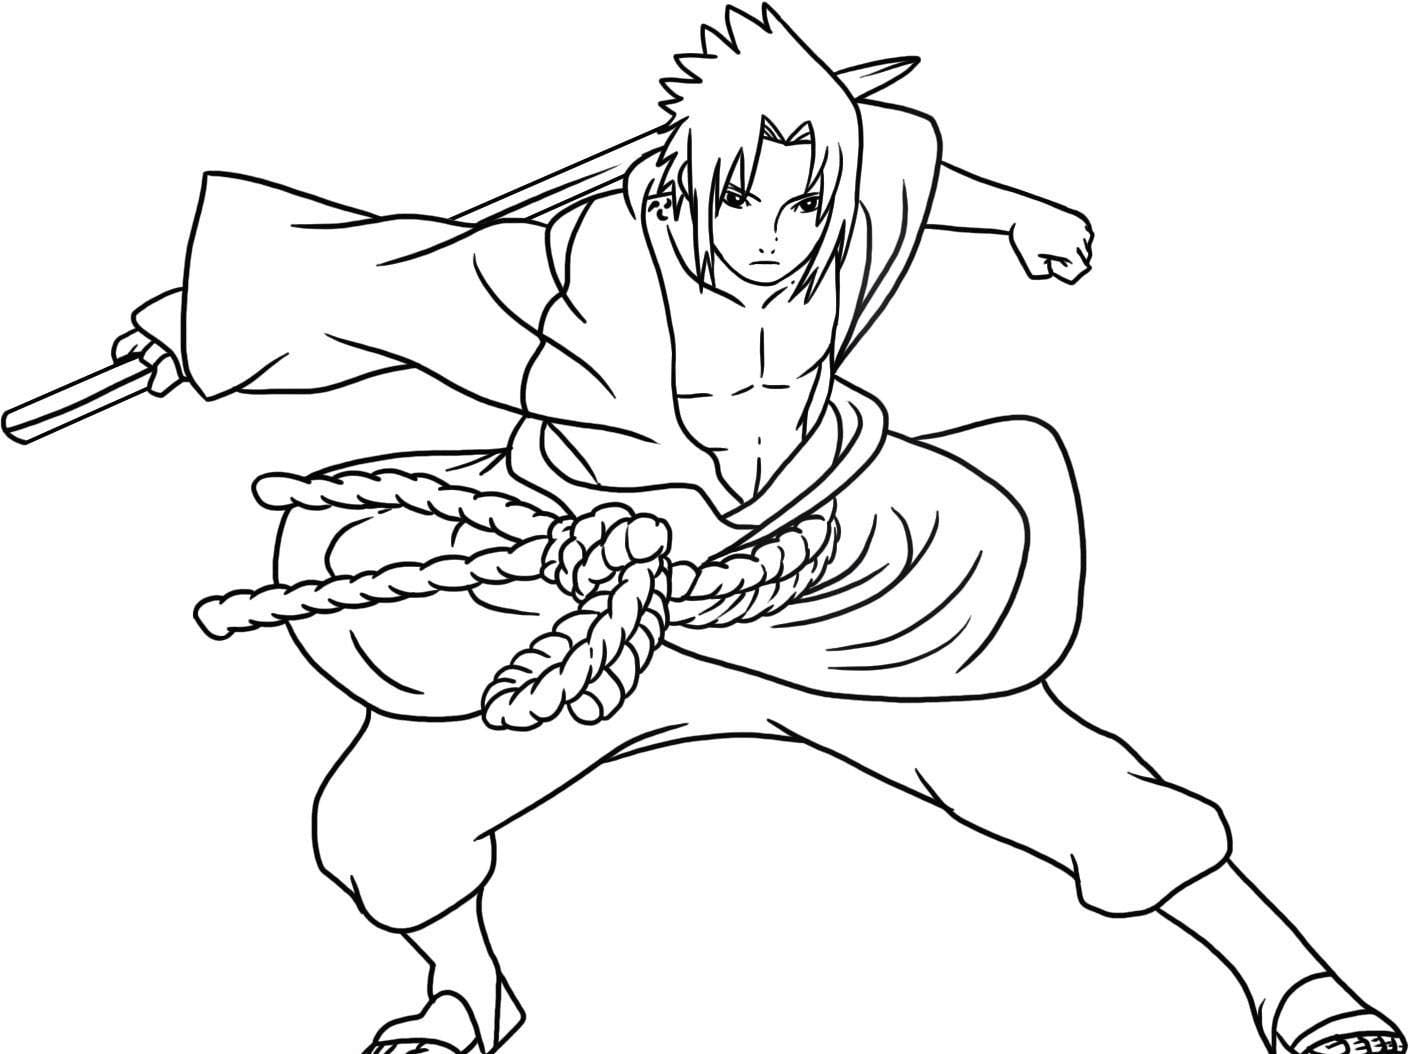 Imagens Para Pintar Do Naruto